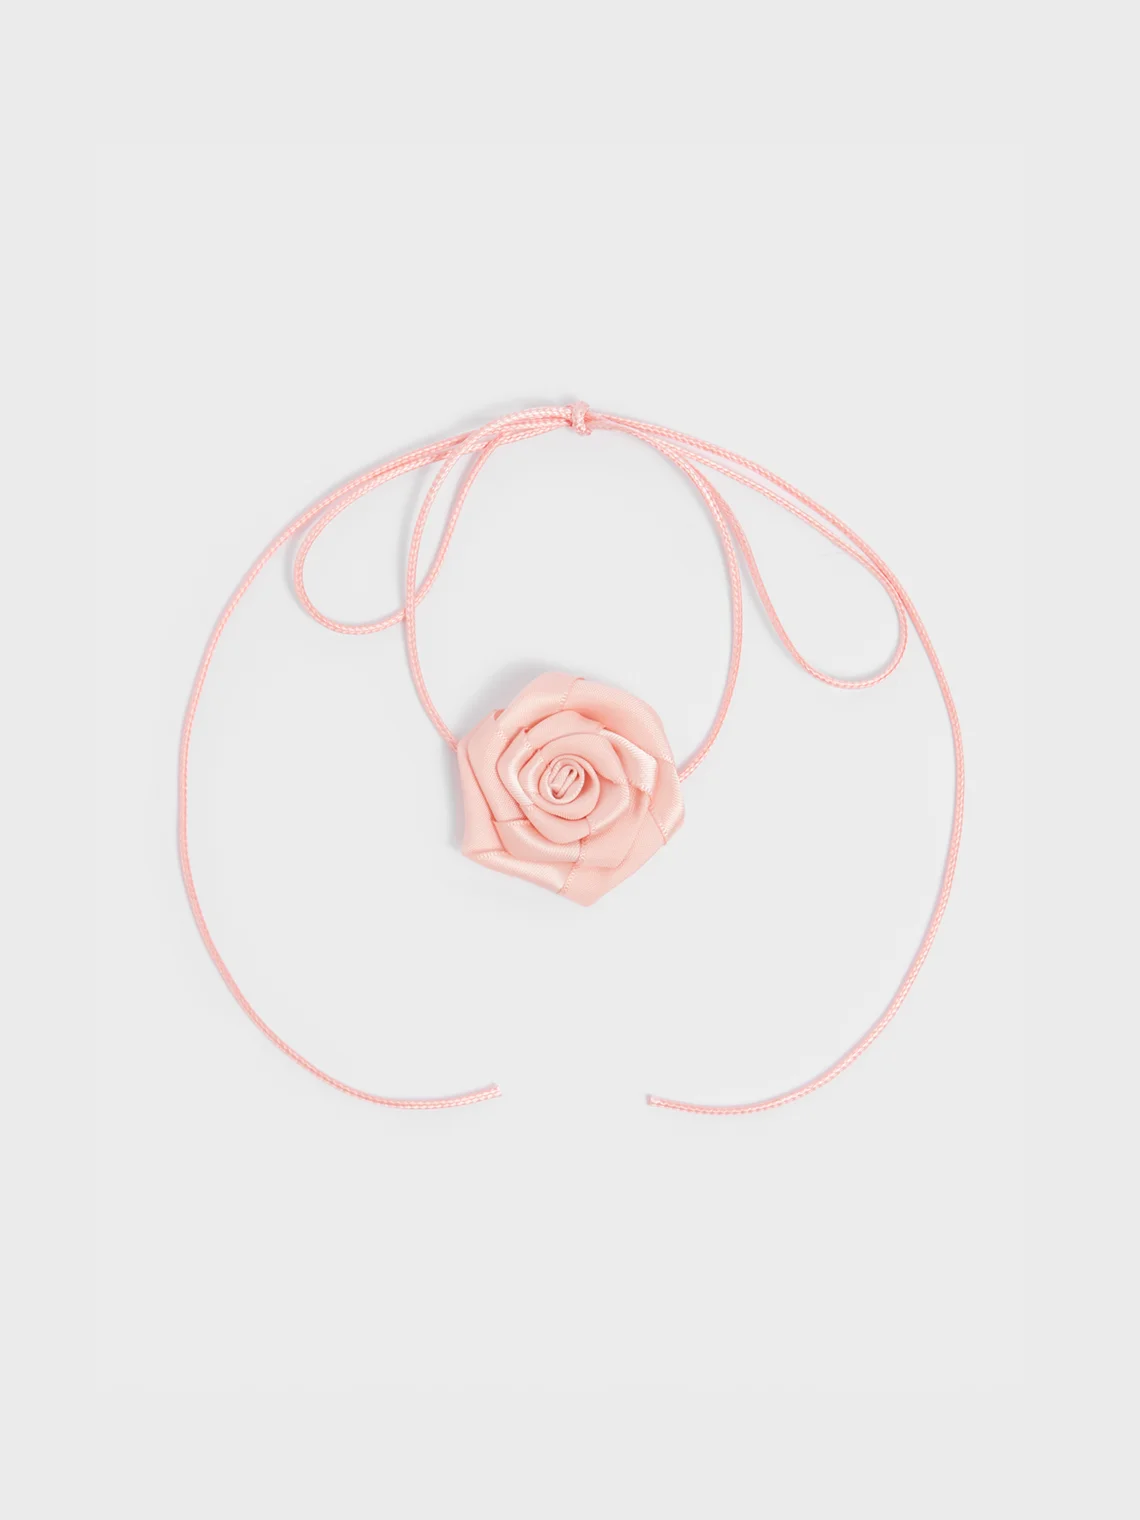 3D rose lace up choker